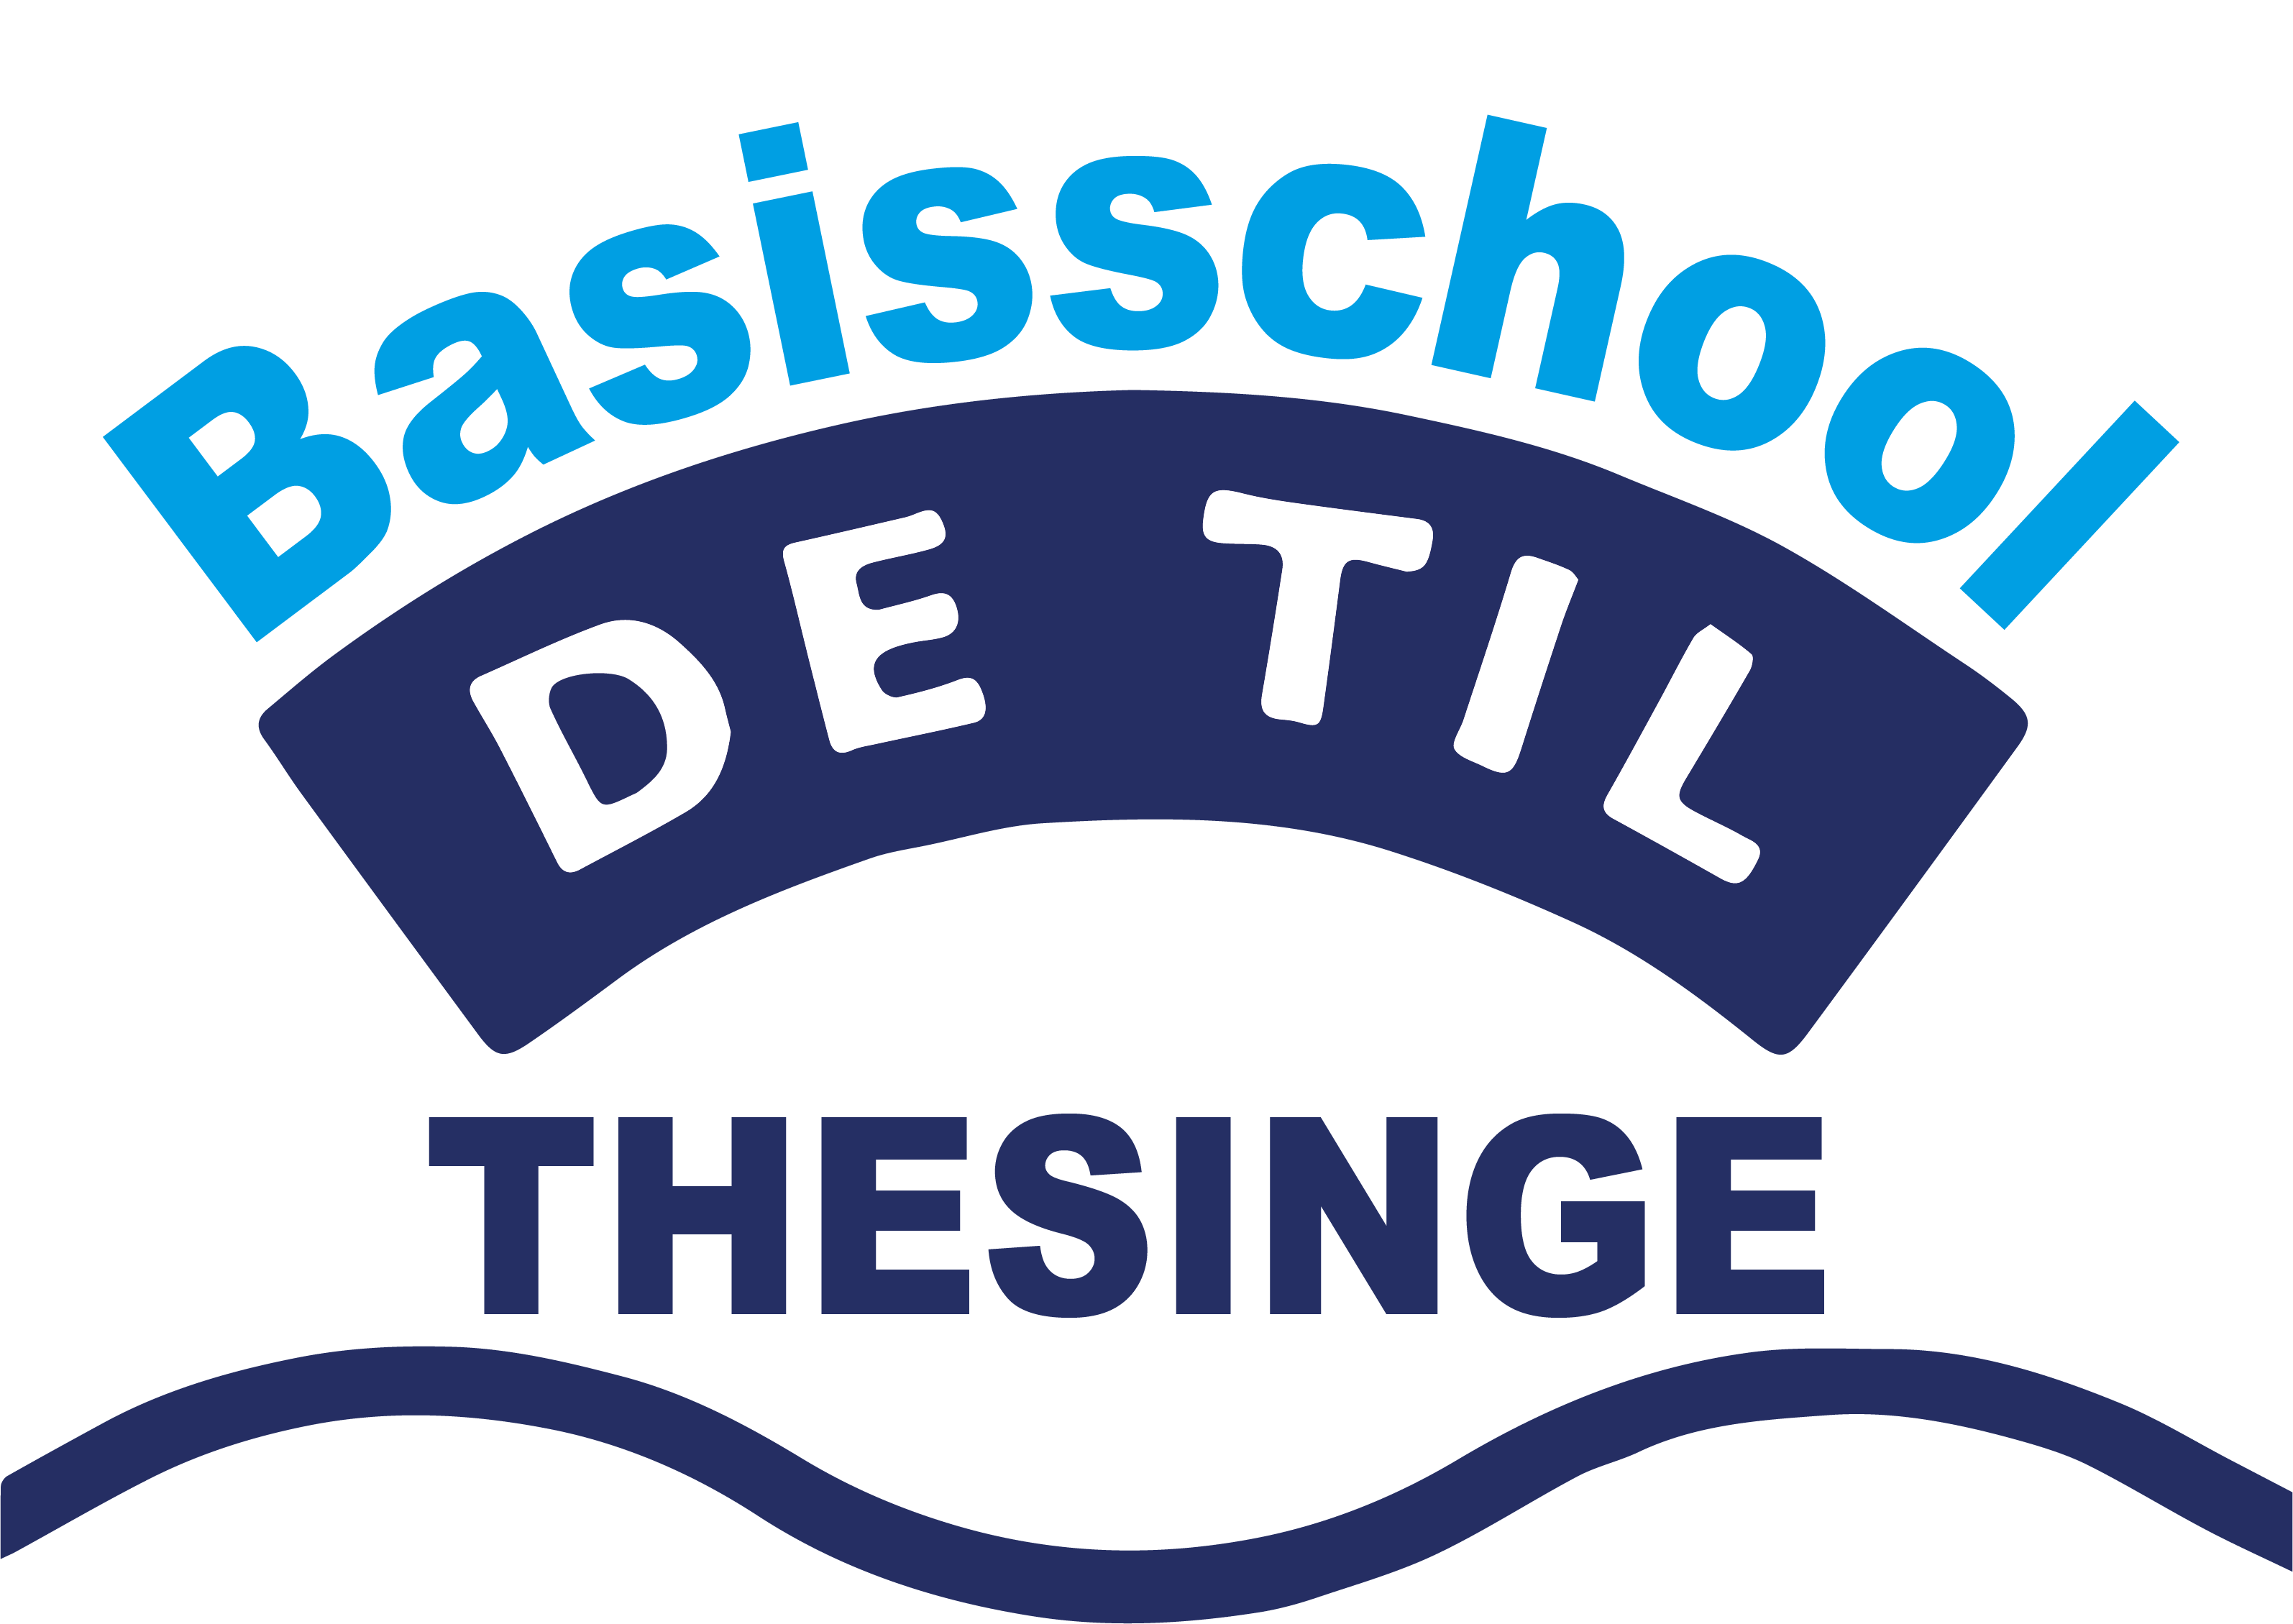 CBS De Til logo